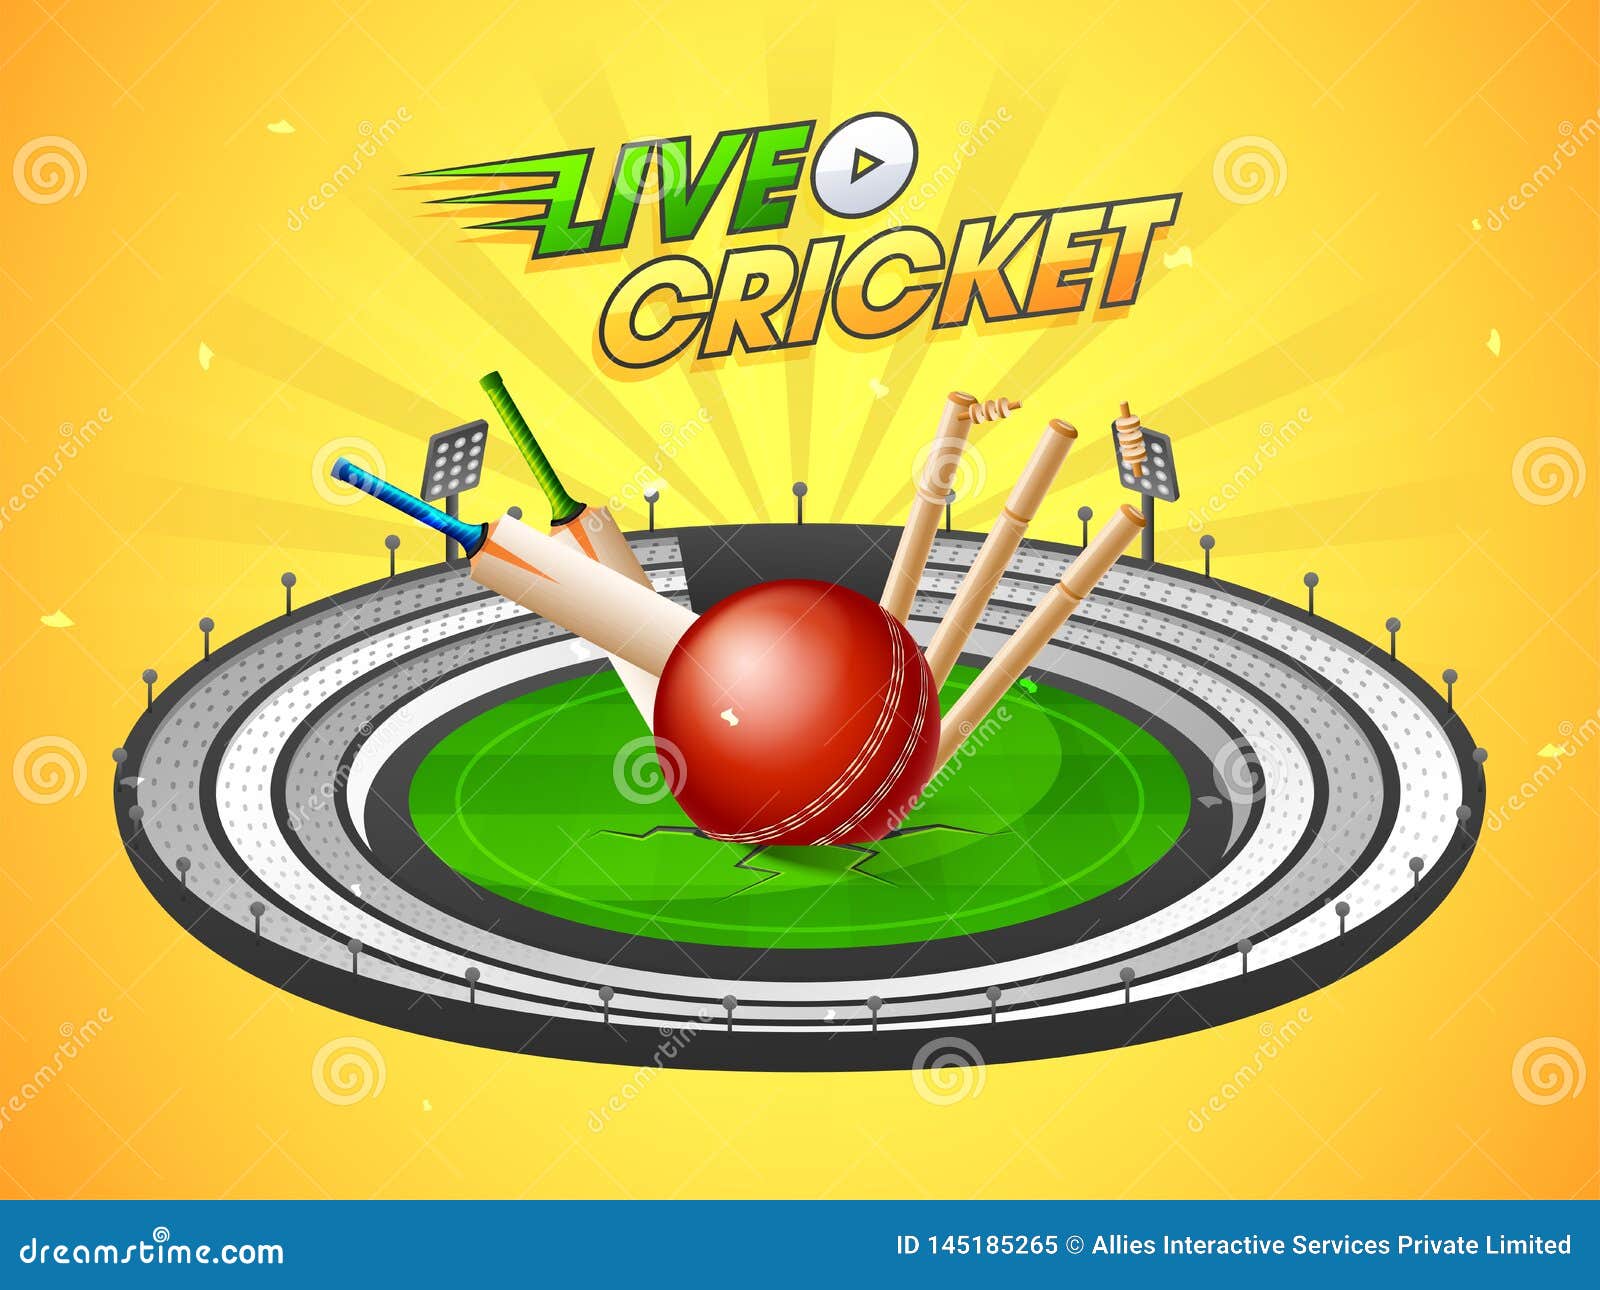 Live Cricket Stock Illustrations